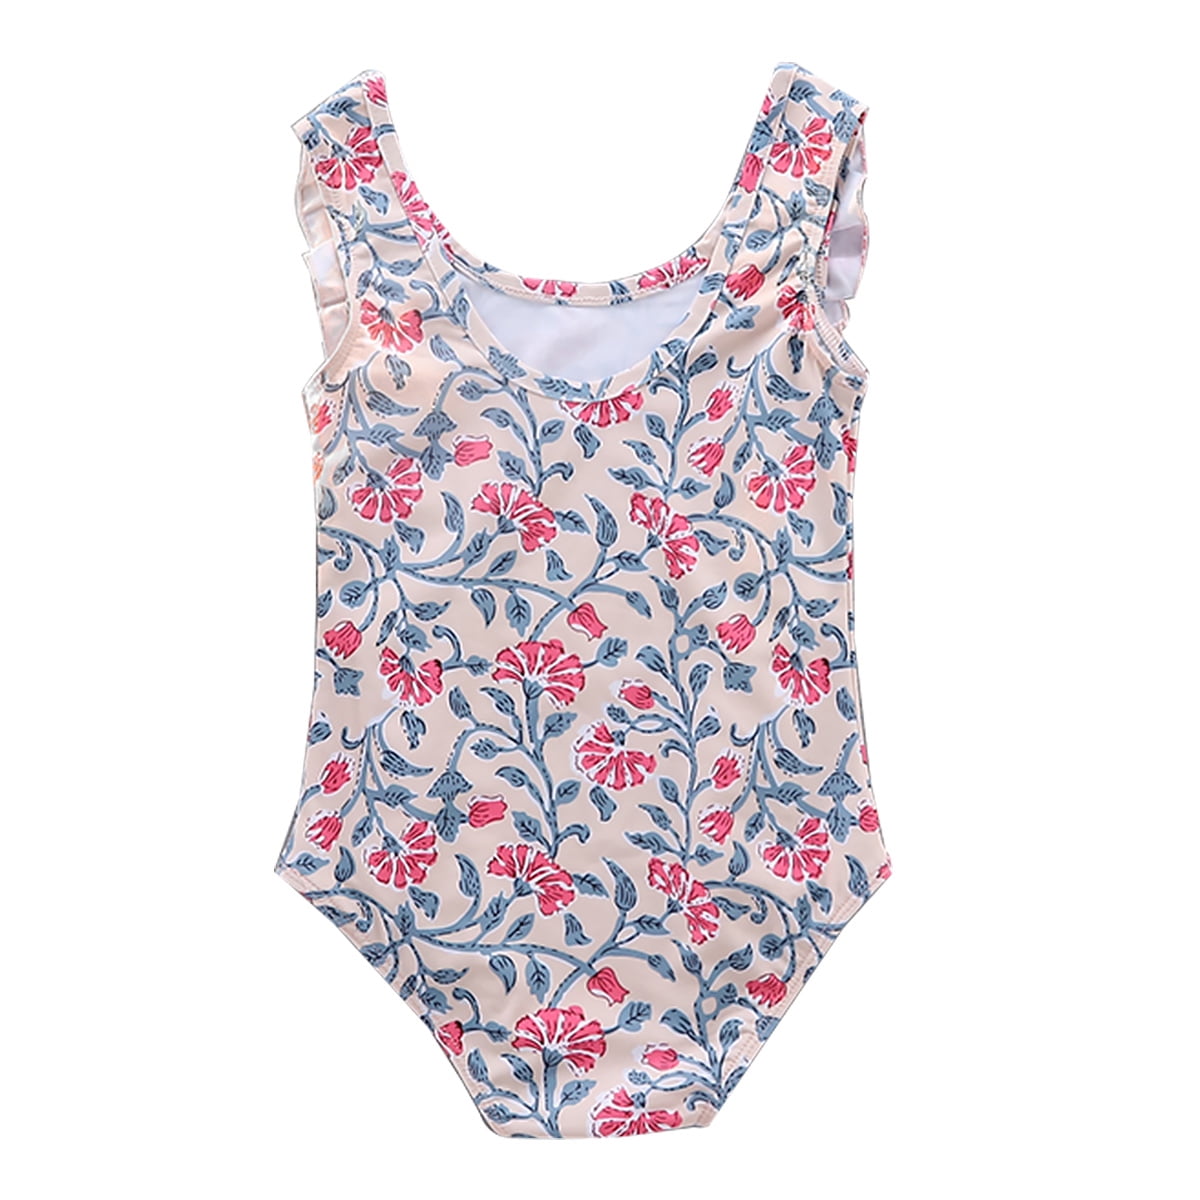 Sun Protection Choomomo Baby Girls Toddler Swimsuits Floral Printed Long Sleeve Zipper Rash Guard UPF 50